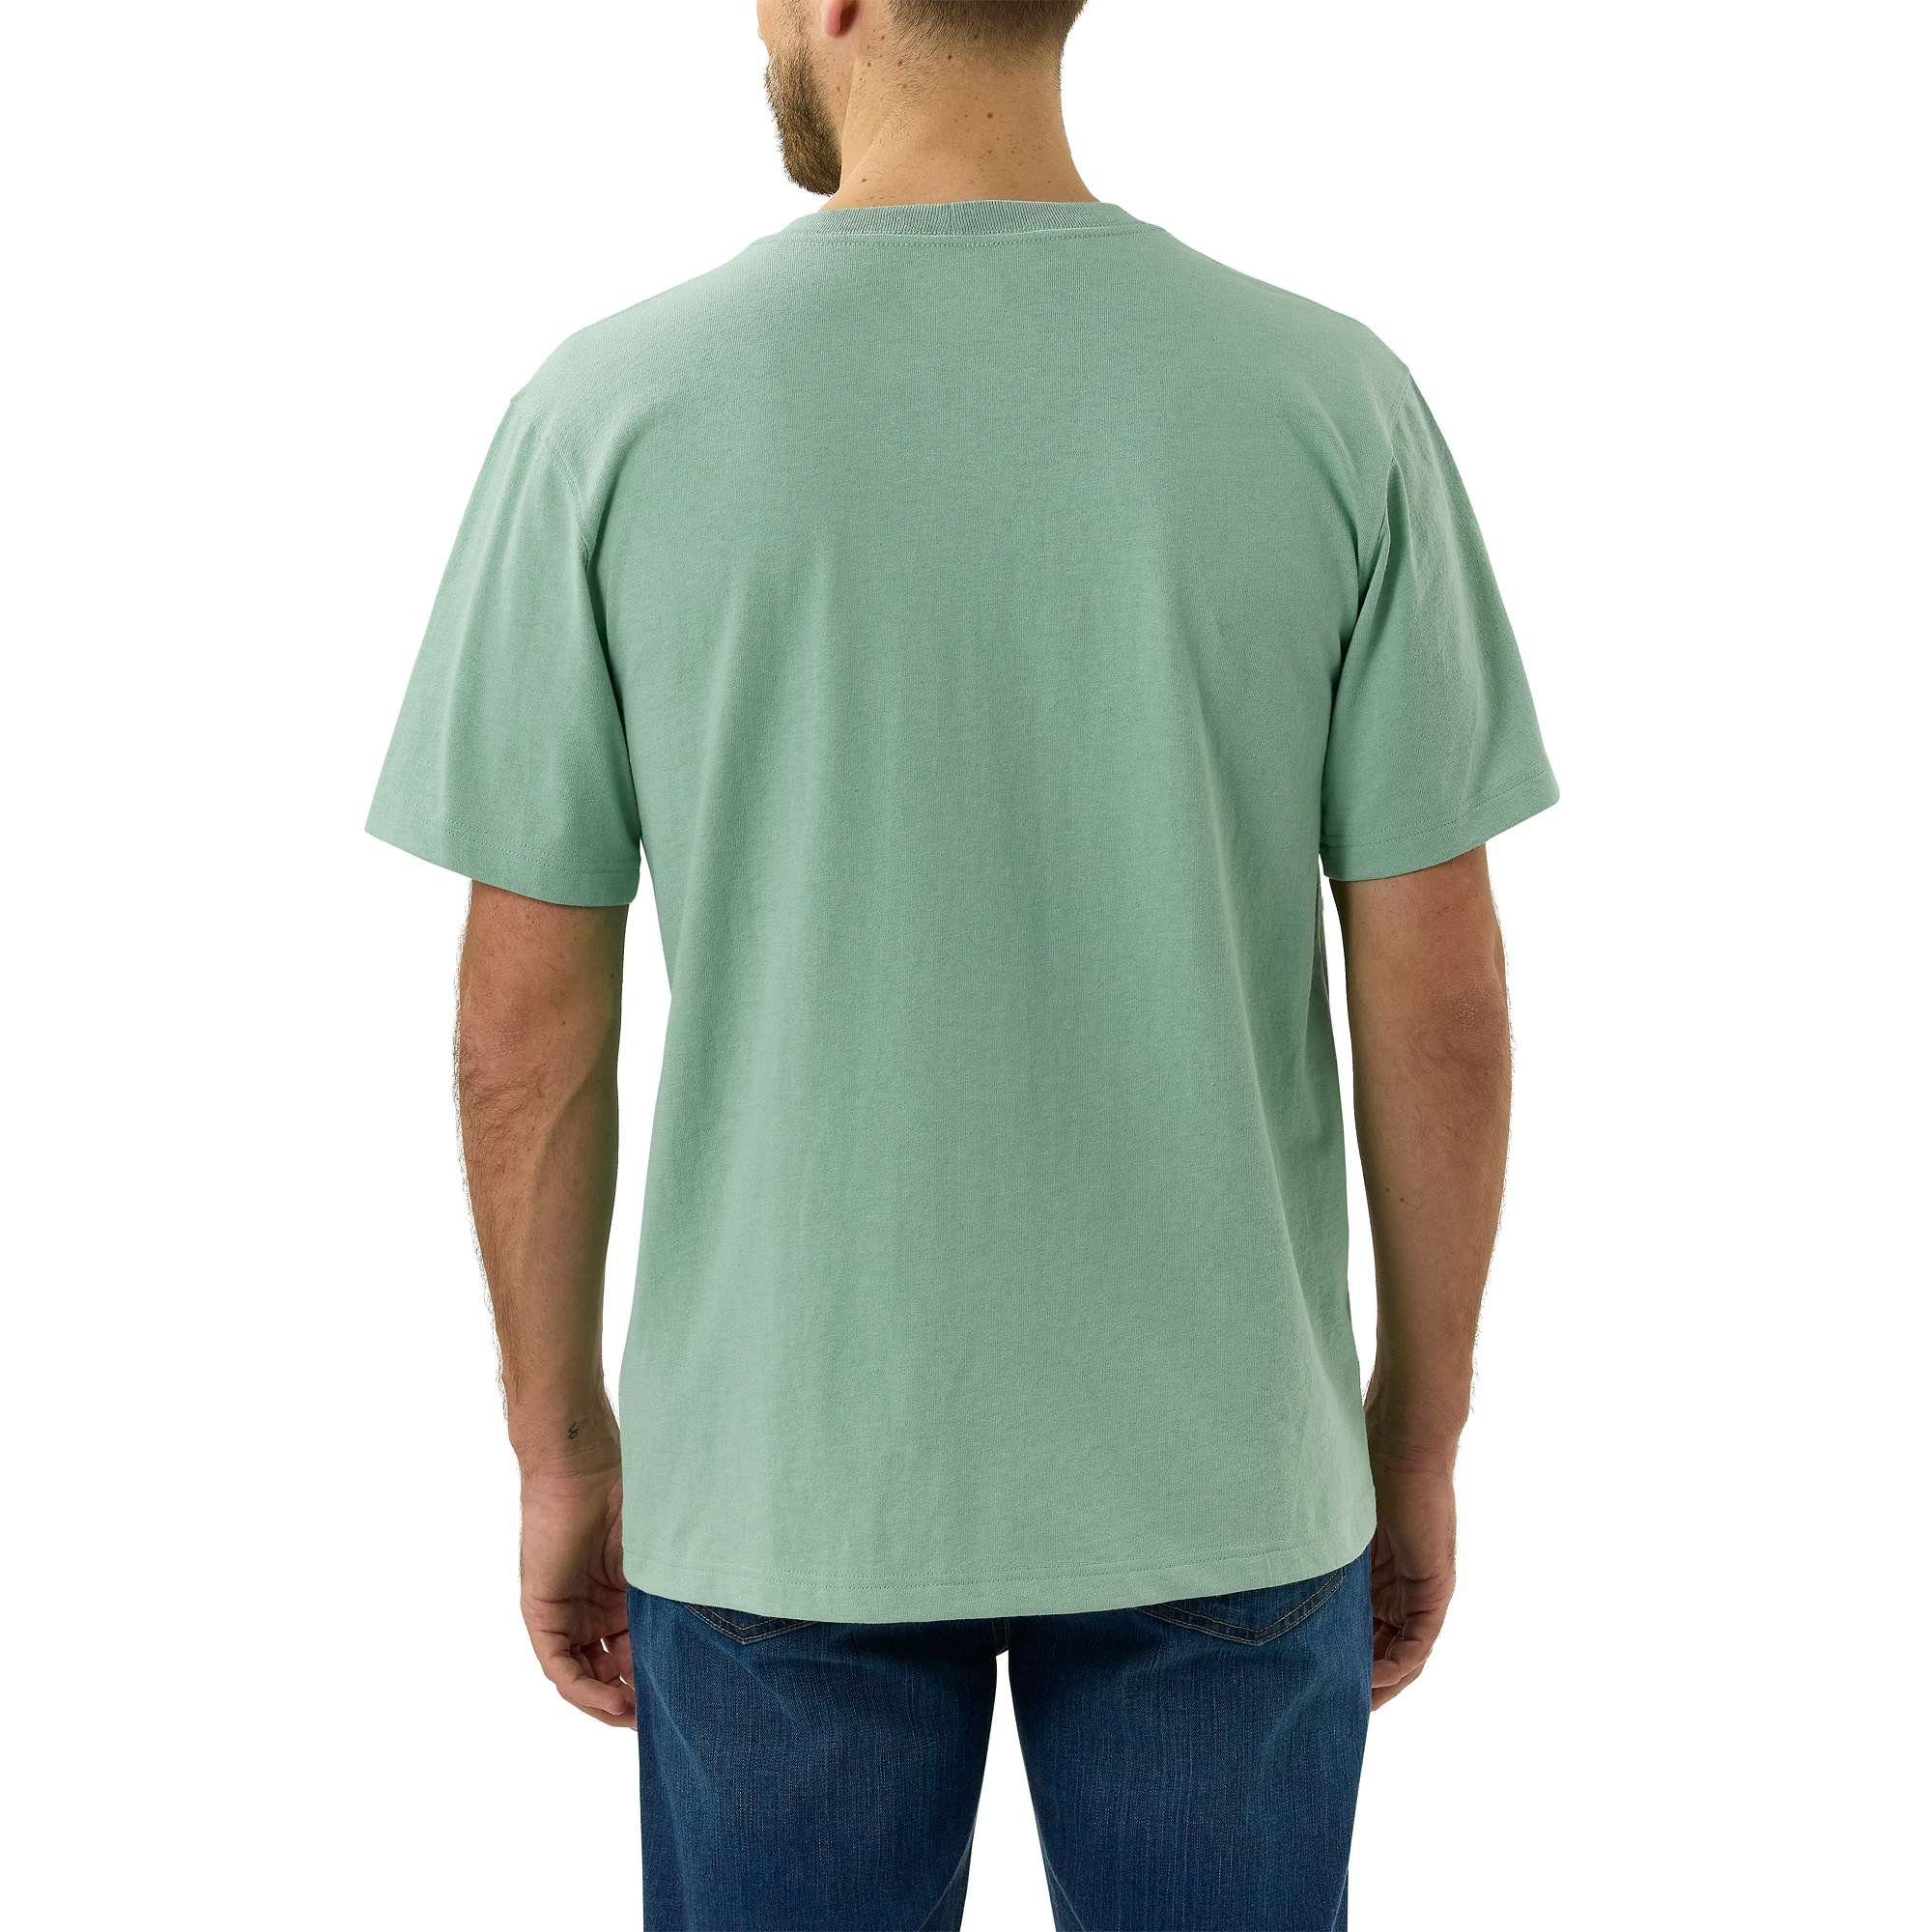 Fit K87 Carhartt T-Shirt SeaGreen Pocket Relaxed